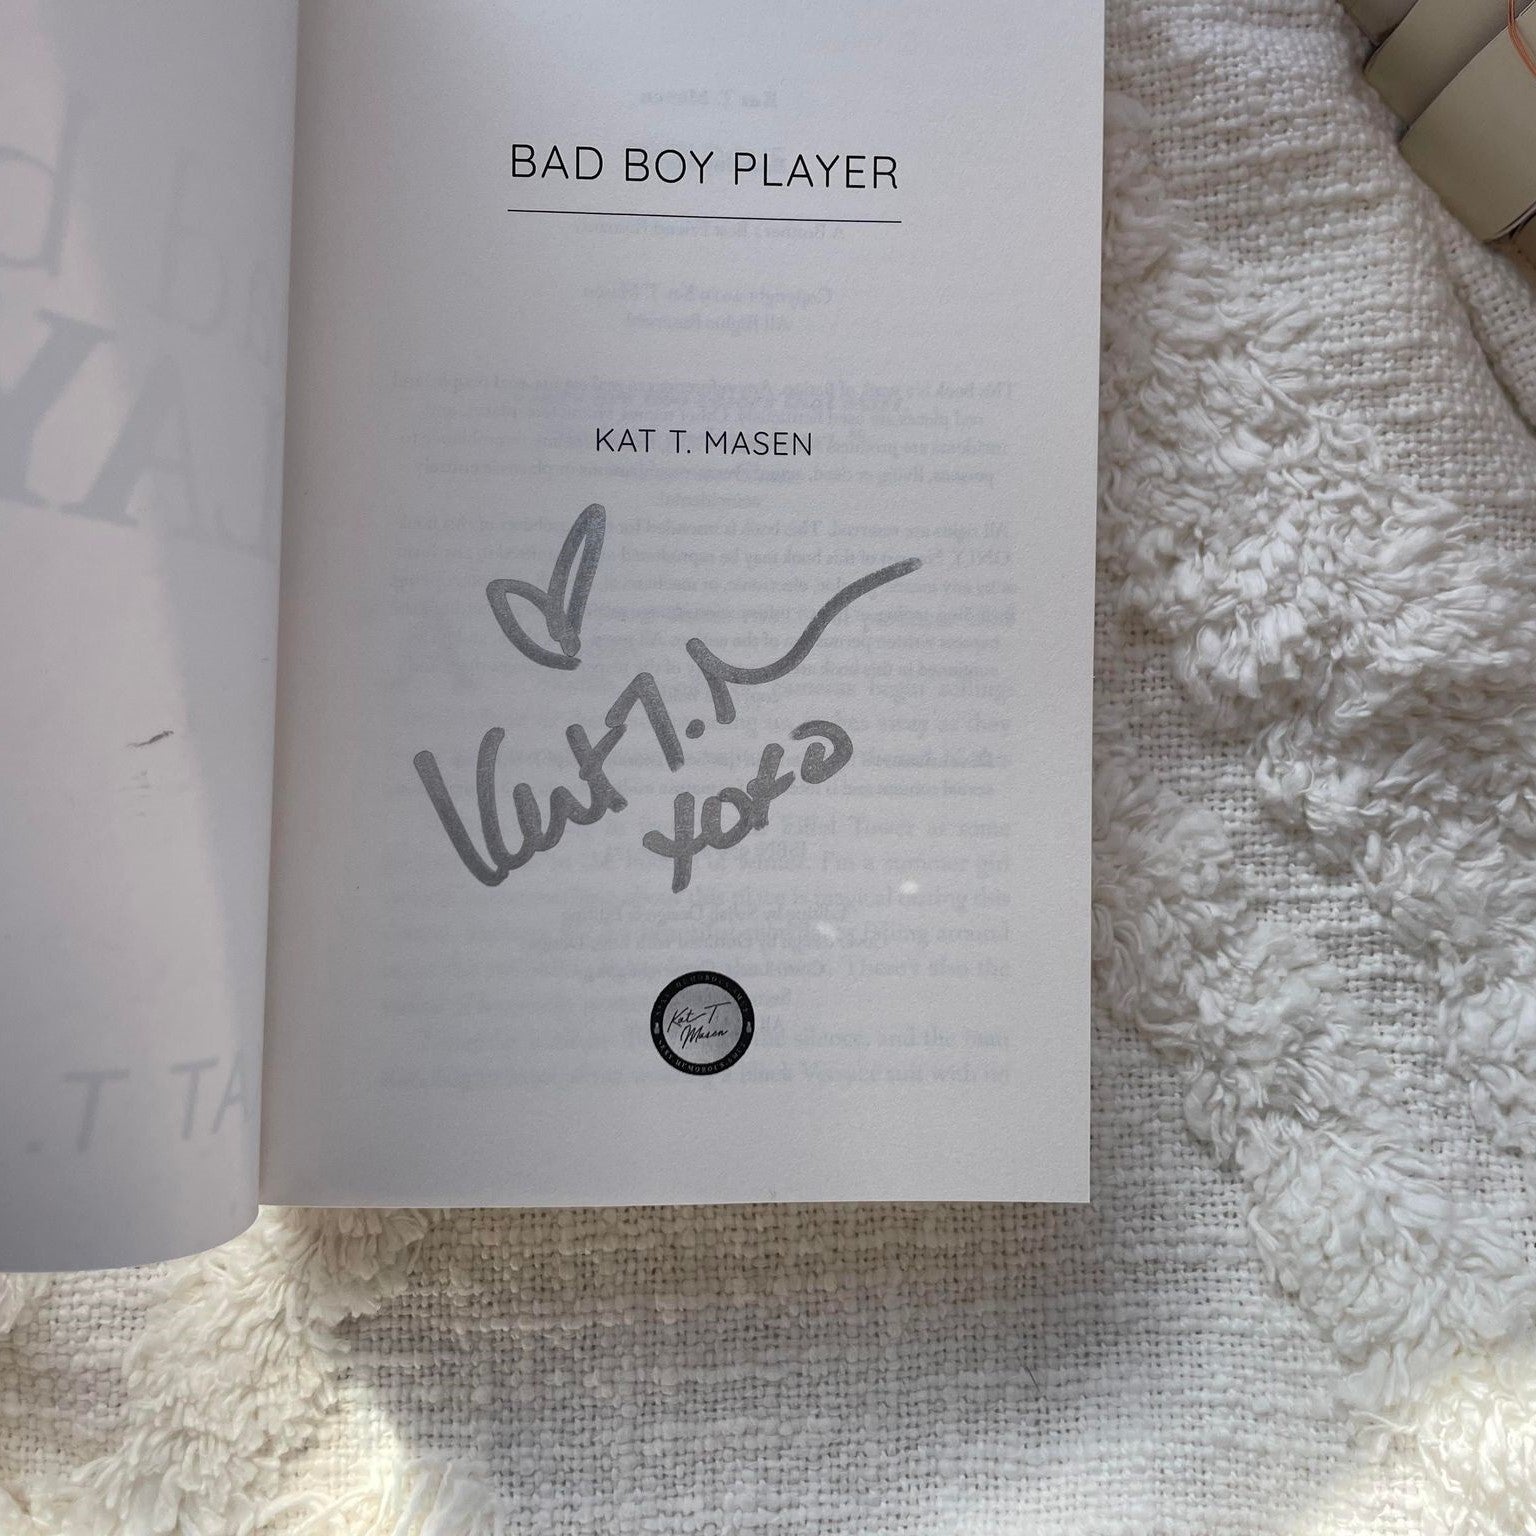 Bad Boy Player: Discreet by Kat T. Masen